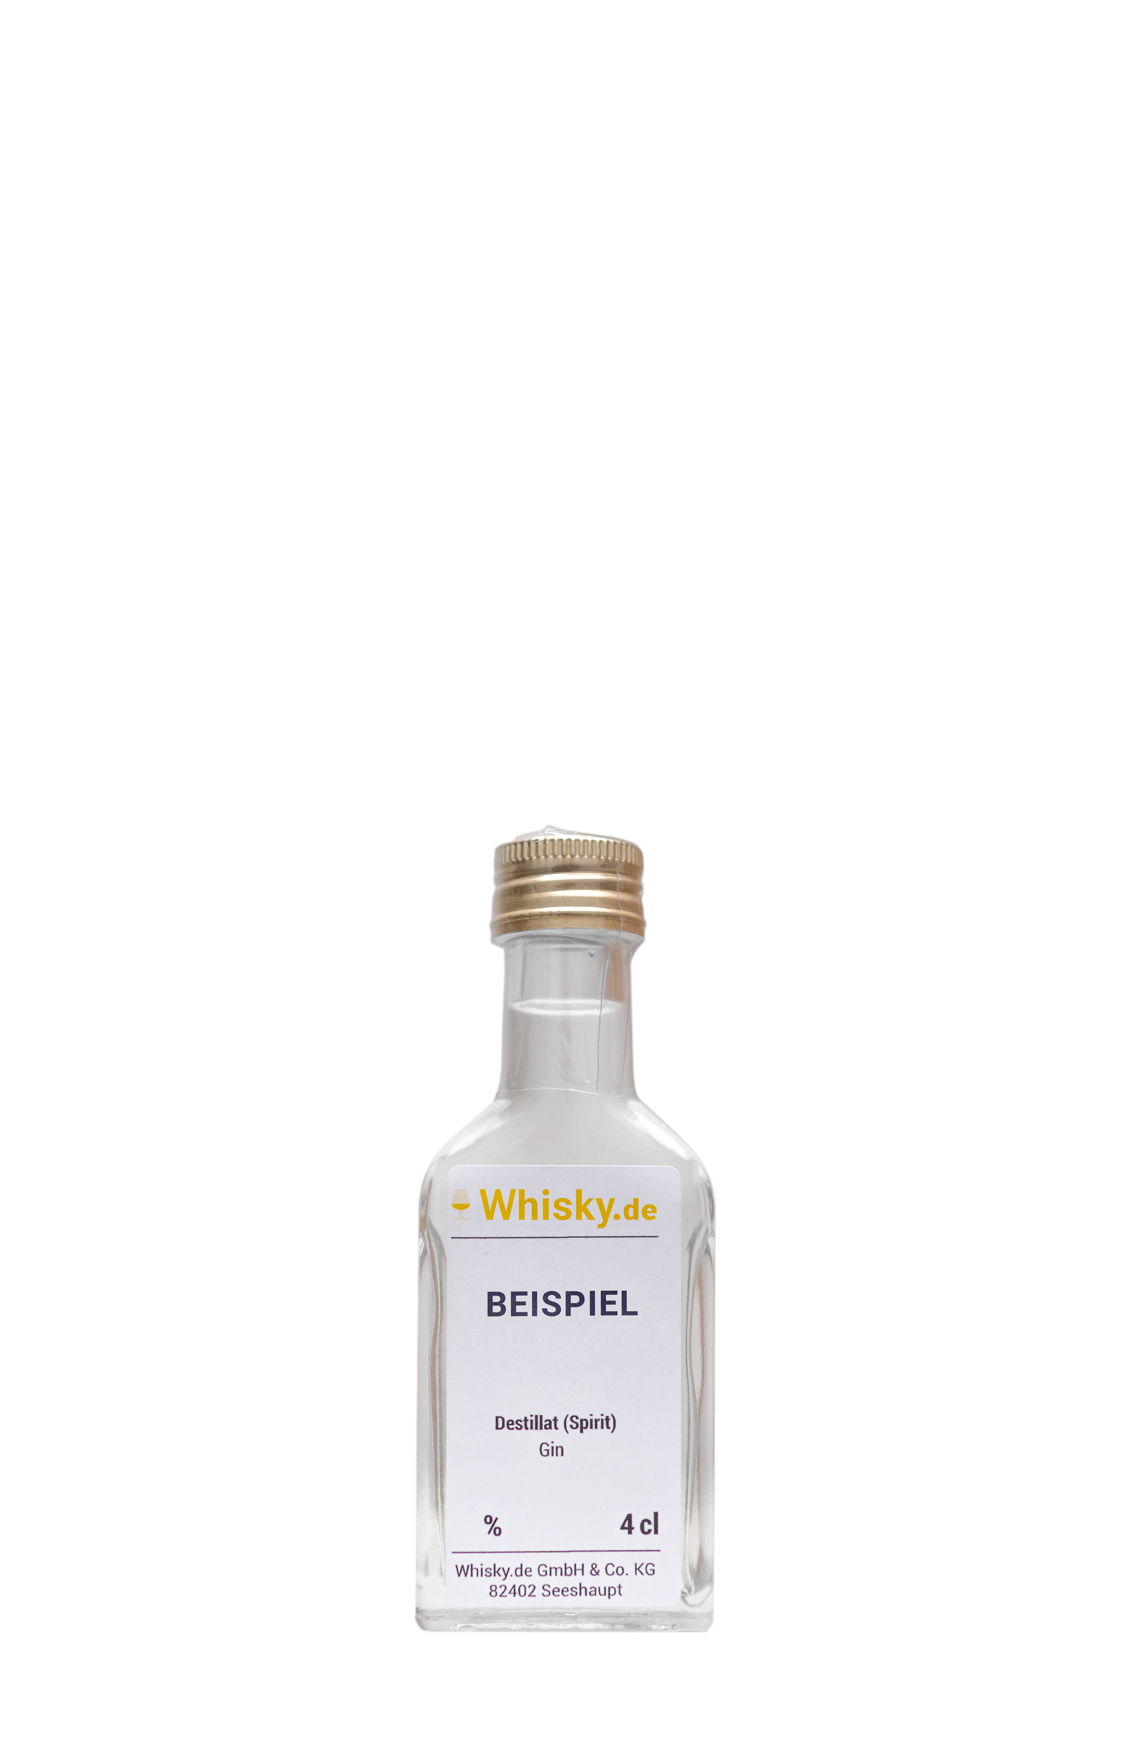 Lemon To Bombay the Murcian - Miniature online Cru store | Whisky.de » Sapphire Premier